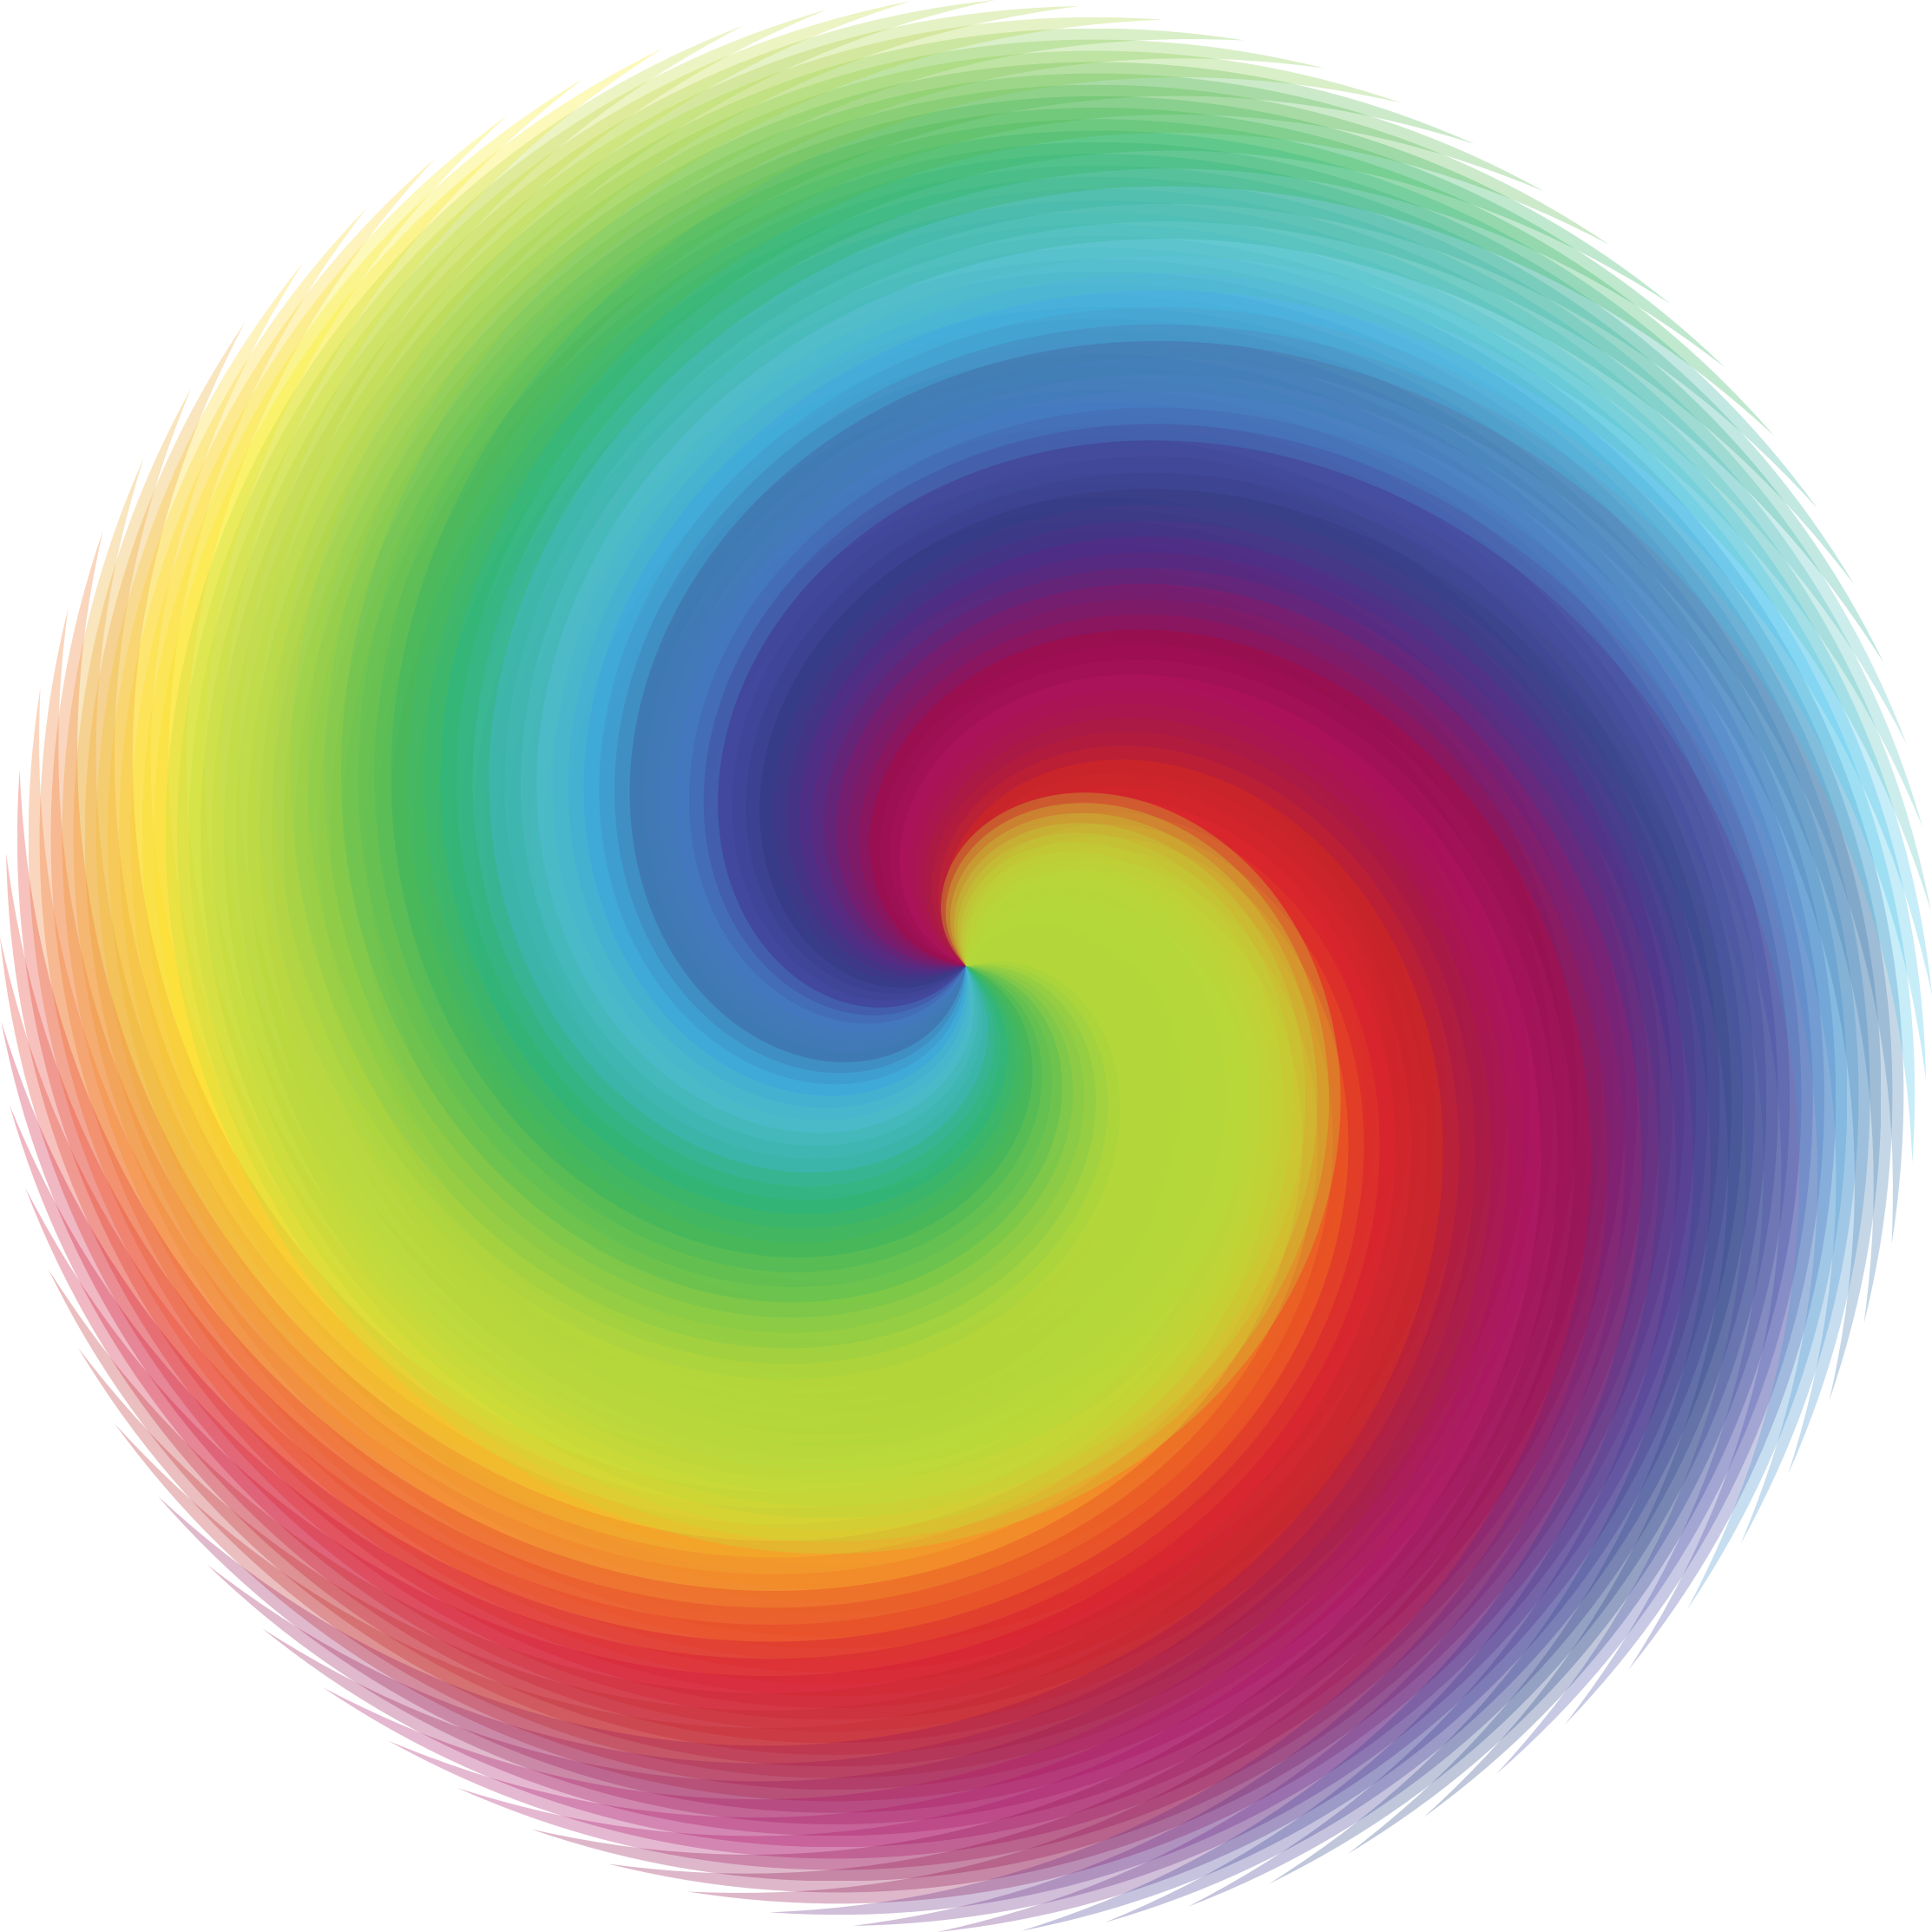 rainbow circle logo clipart download image #41682